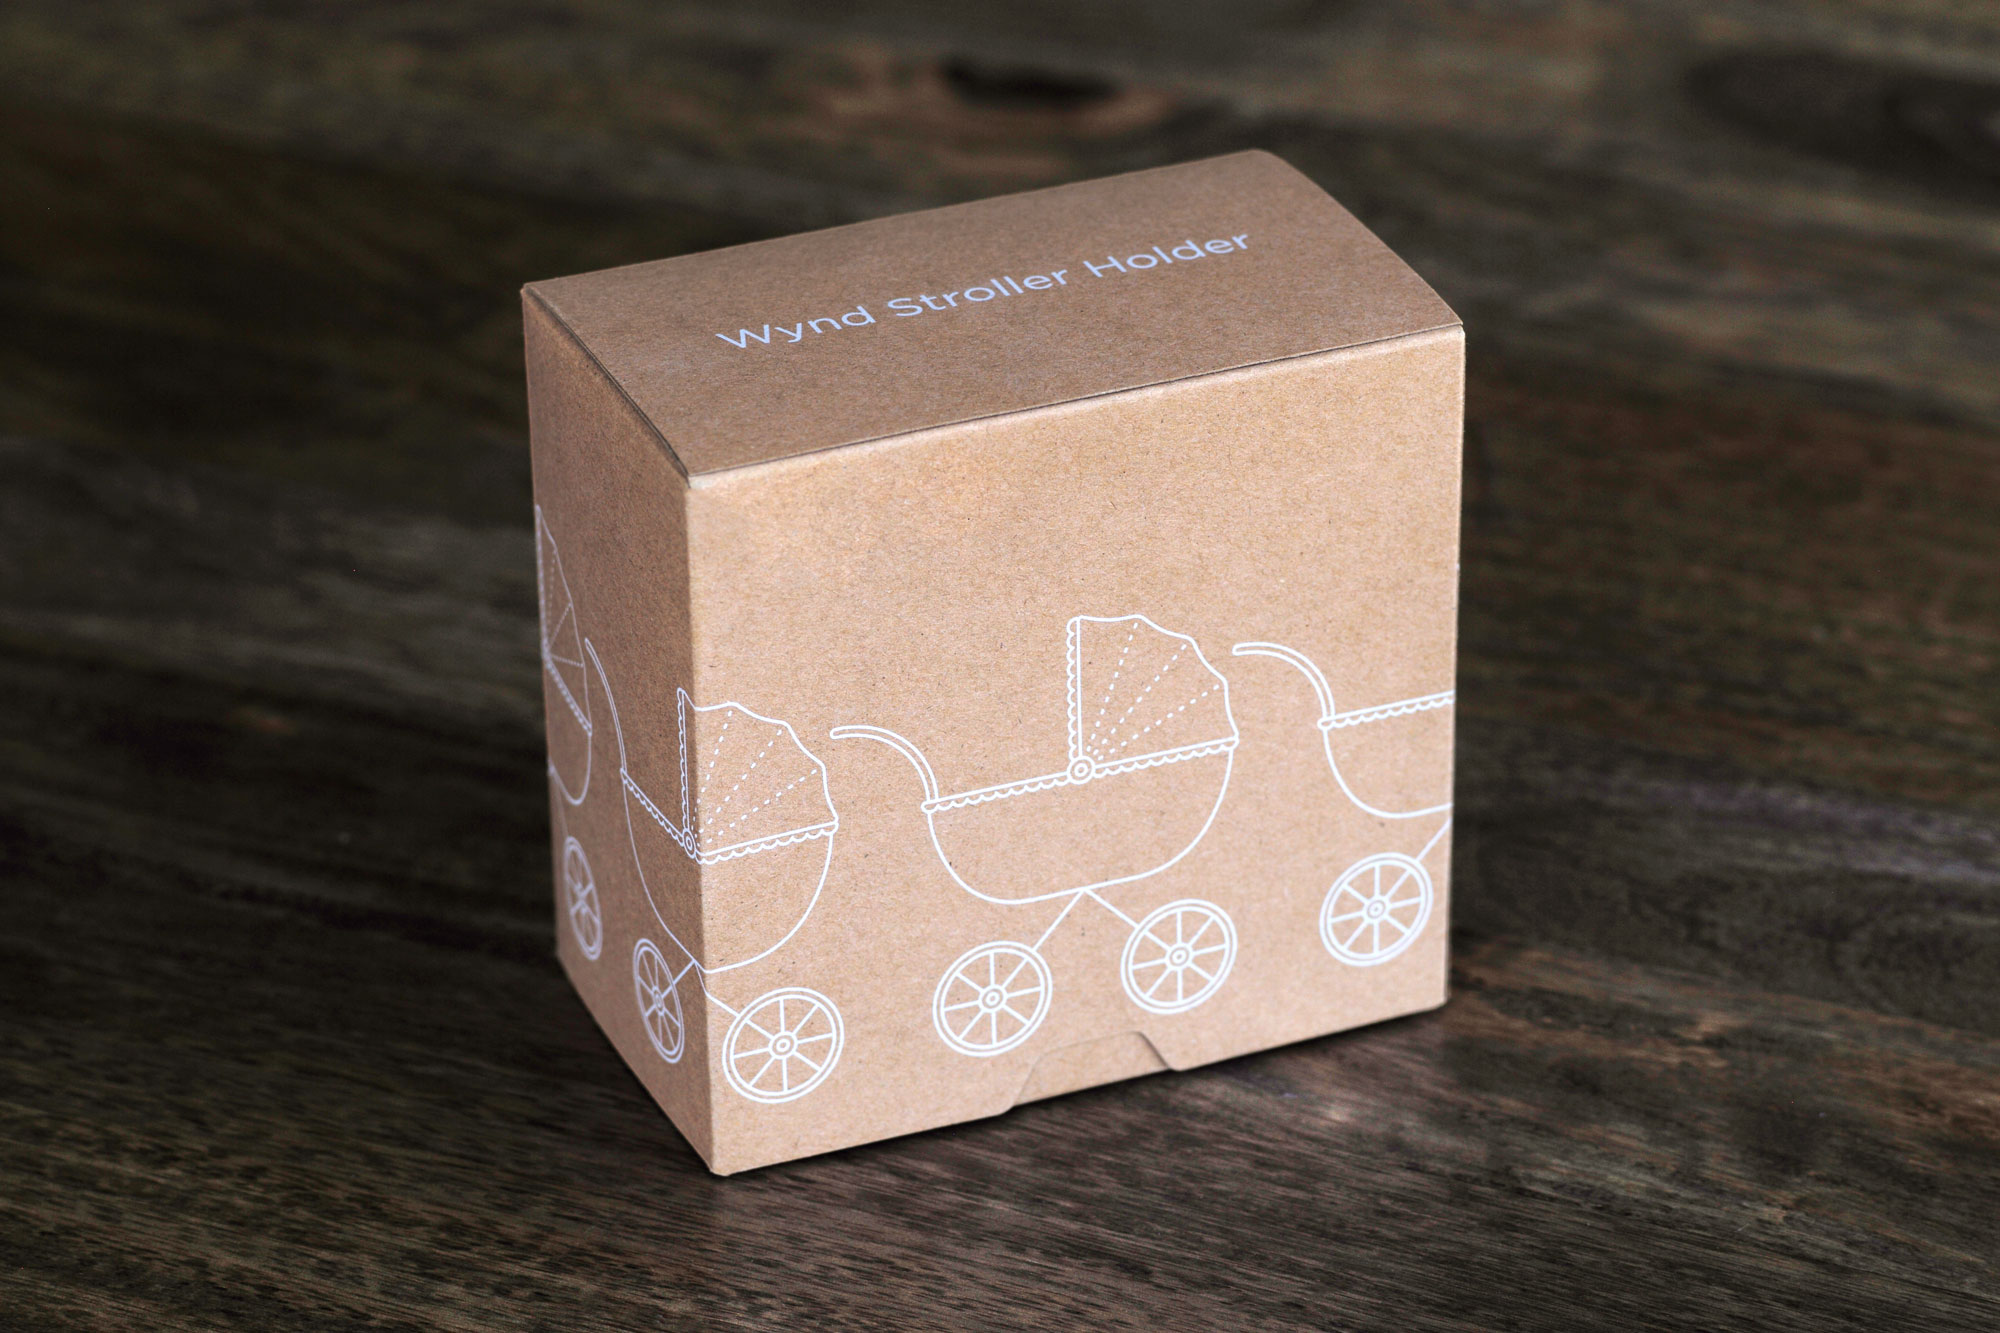 Wynd packaging - The Wynd Baby Stroller Holder box